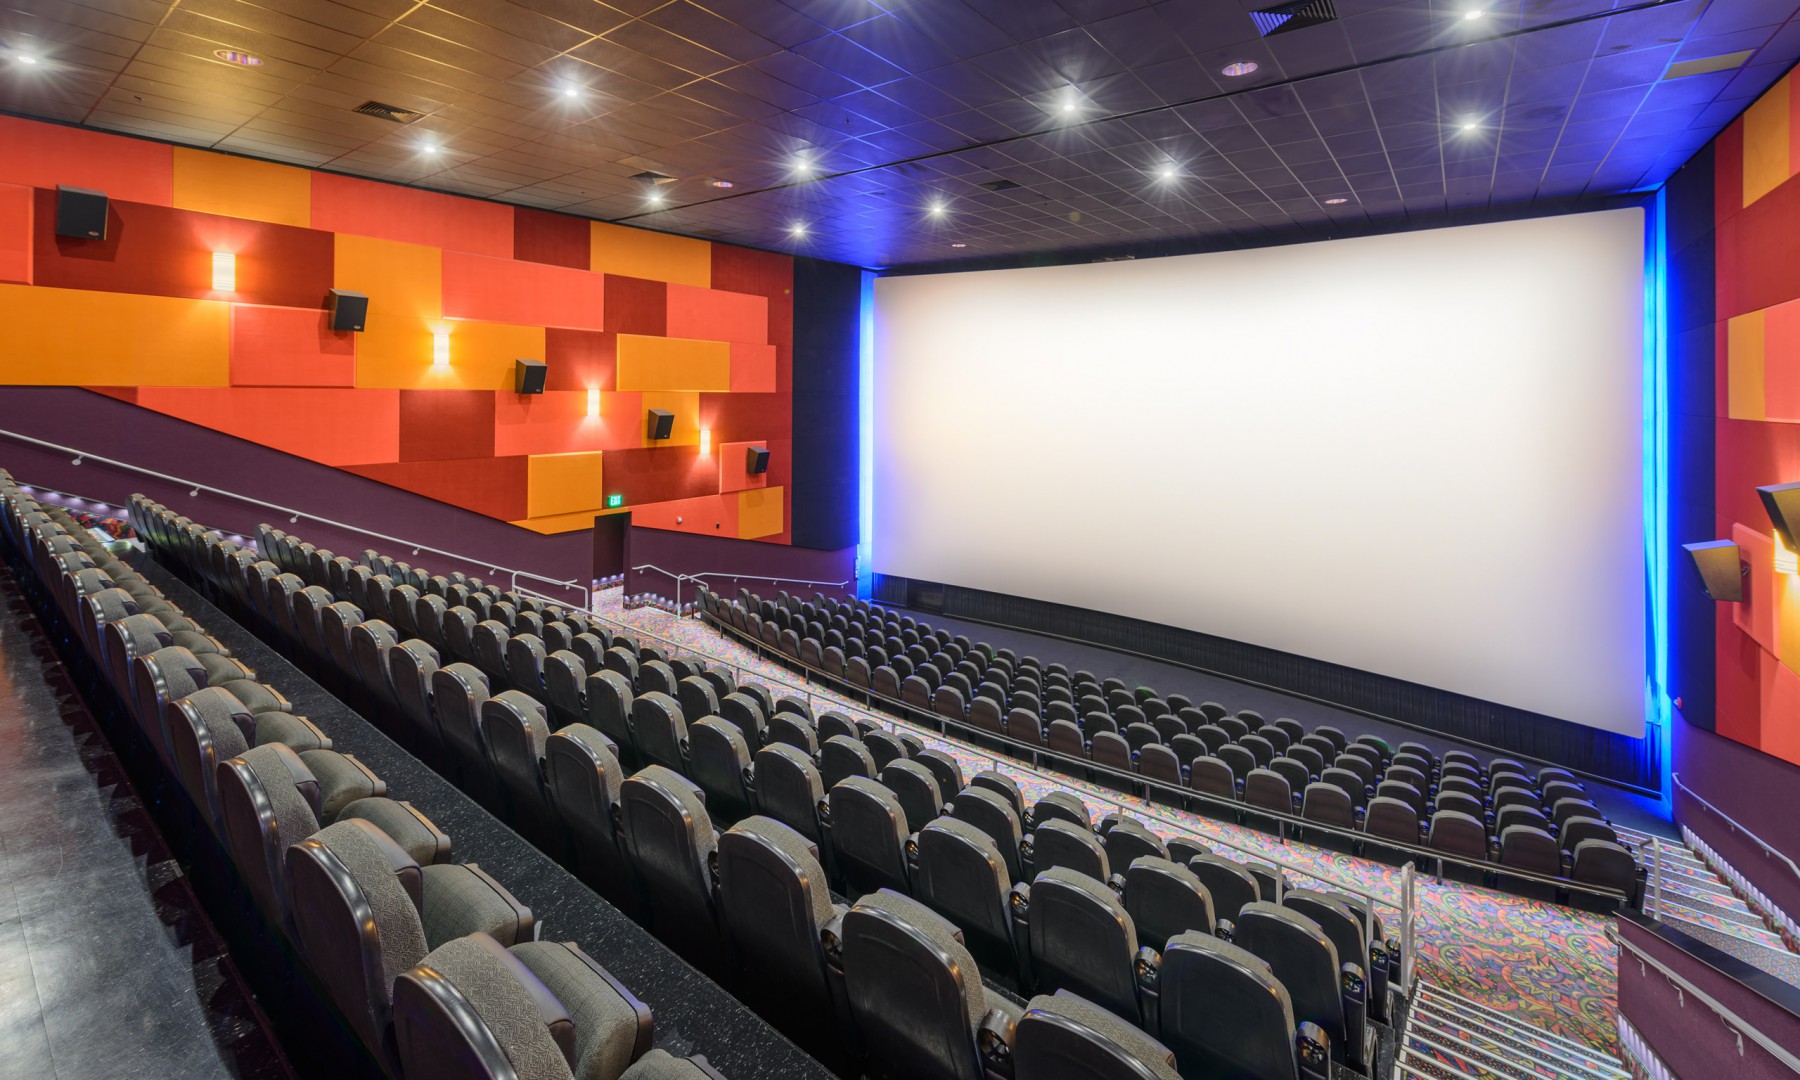 Regal 16 Movies Cinemas Sarasota Fl. regal theater seating chart regal 16 m...